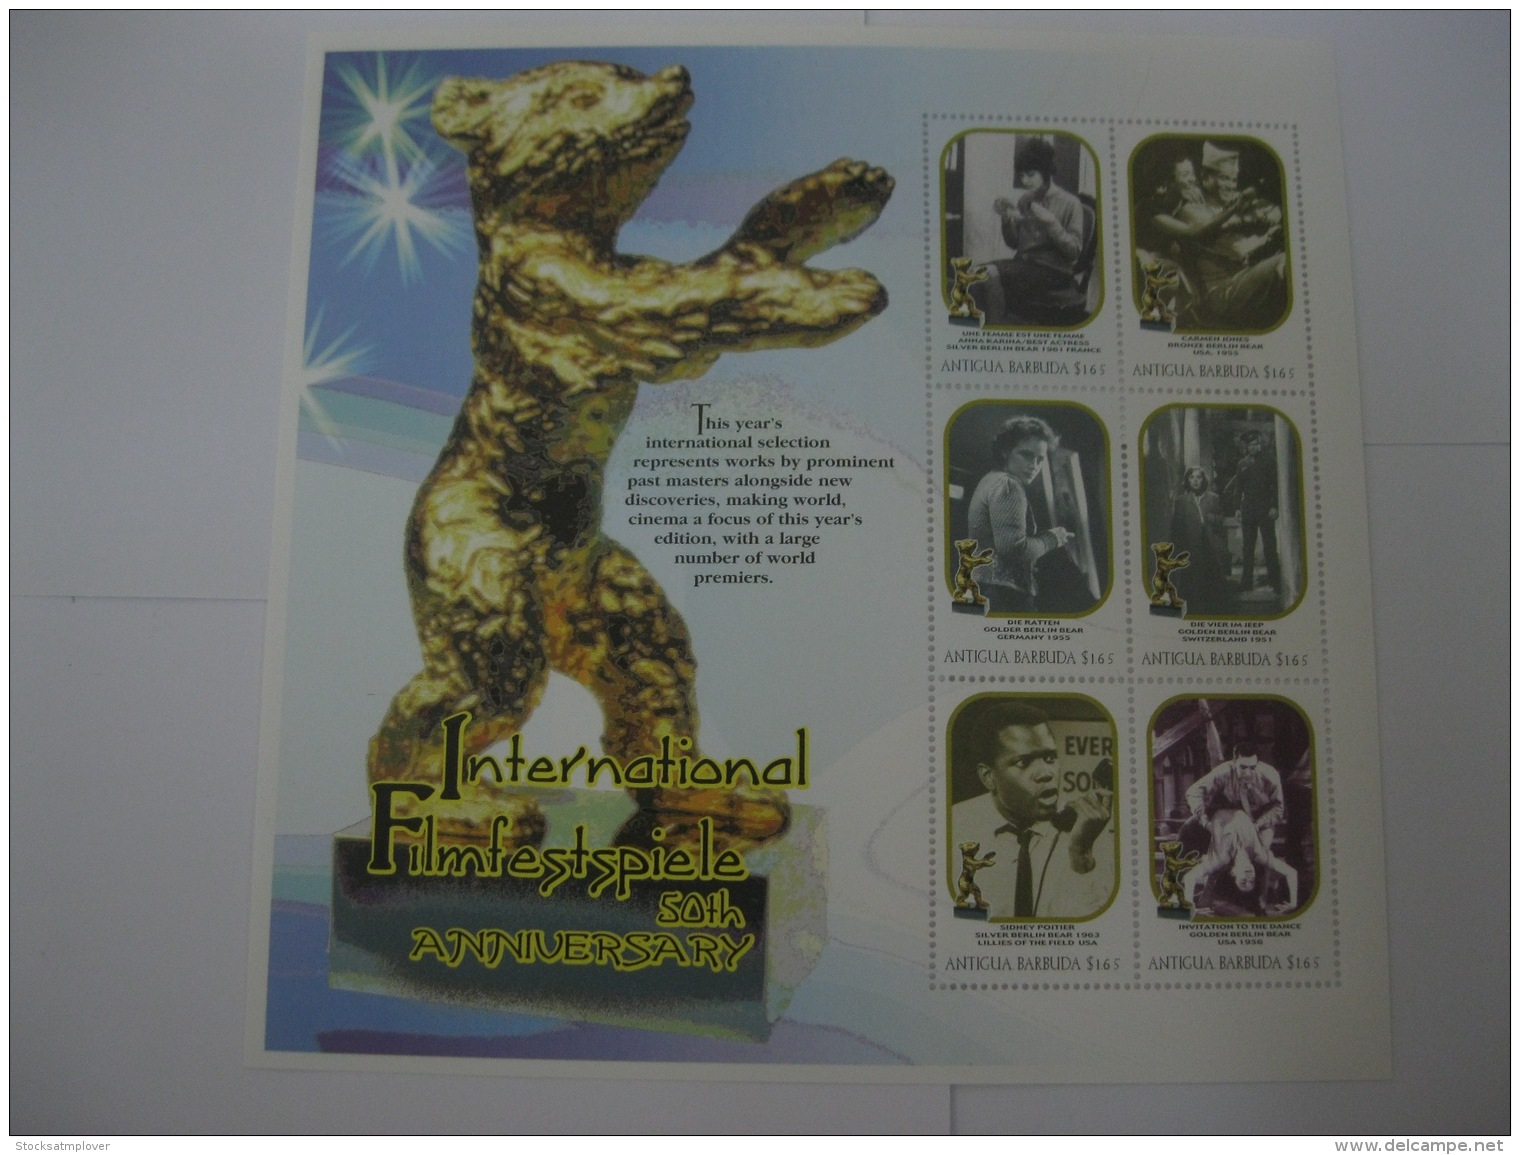 Antigua And Barbuda 2000 International Filmfestspiele Sheet Of 6 Stamps - Antigua And Barbuda (1981-...)